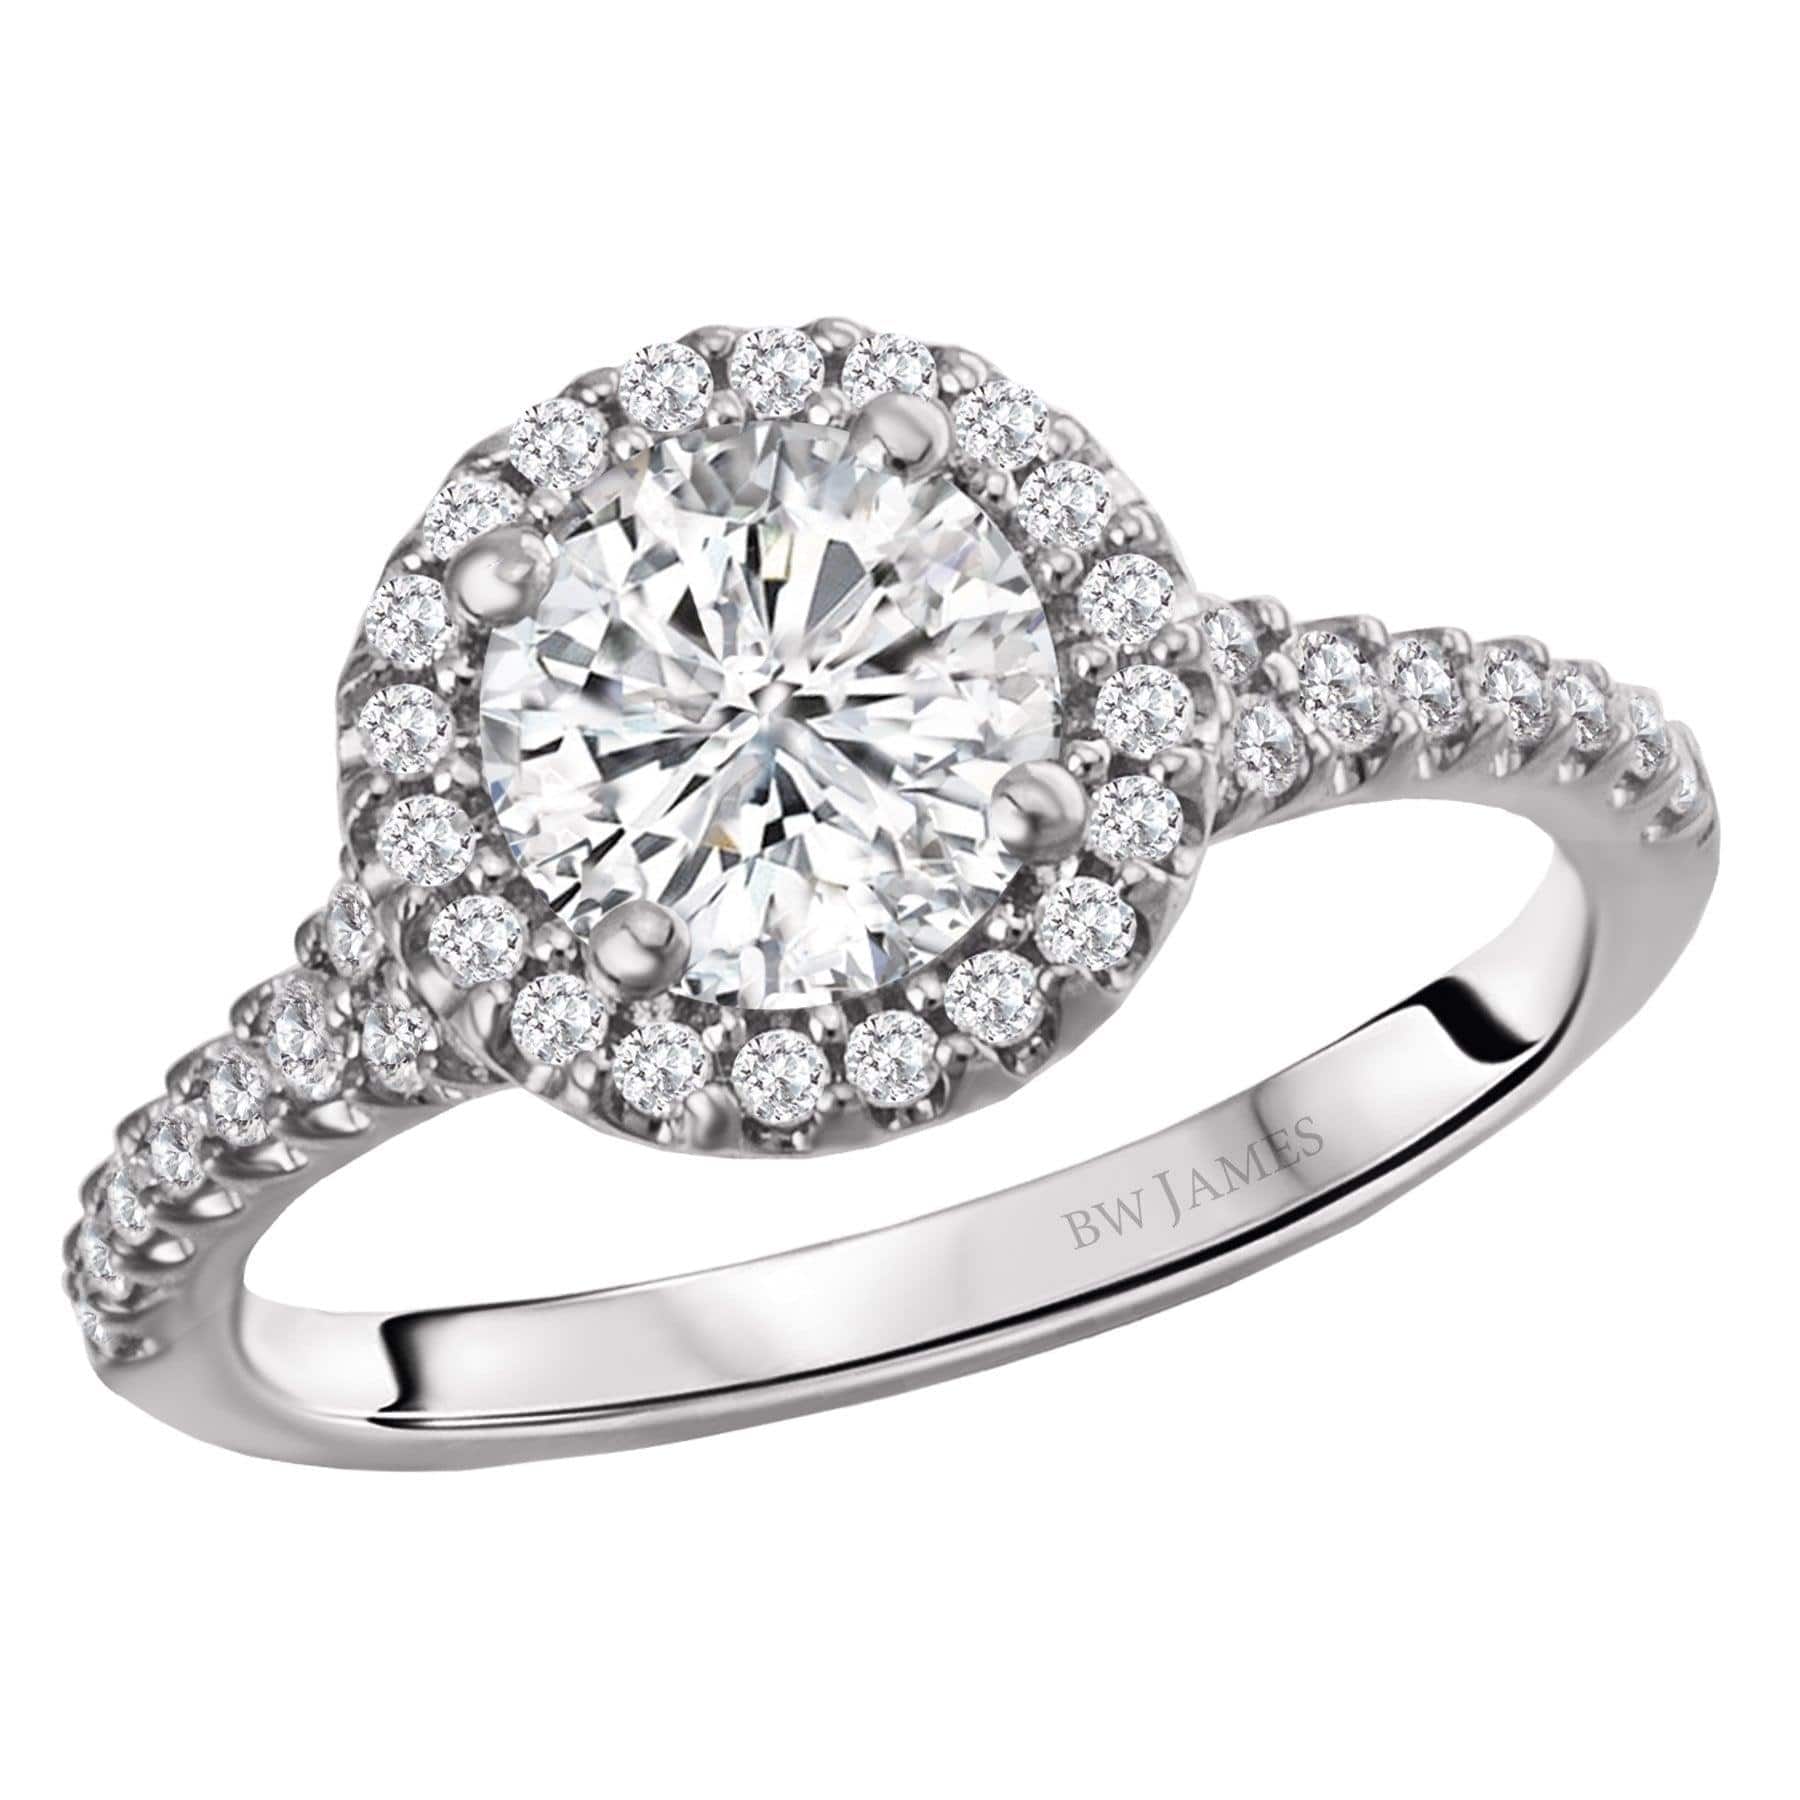 bw james engagement rings the denver halo semi mount diamond ring 14118607192158